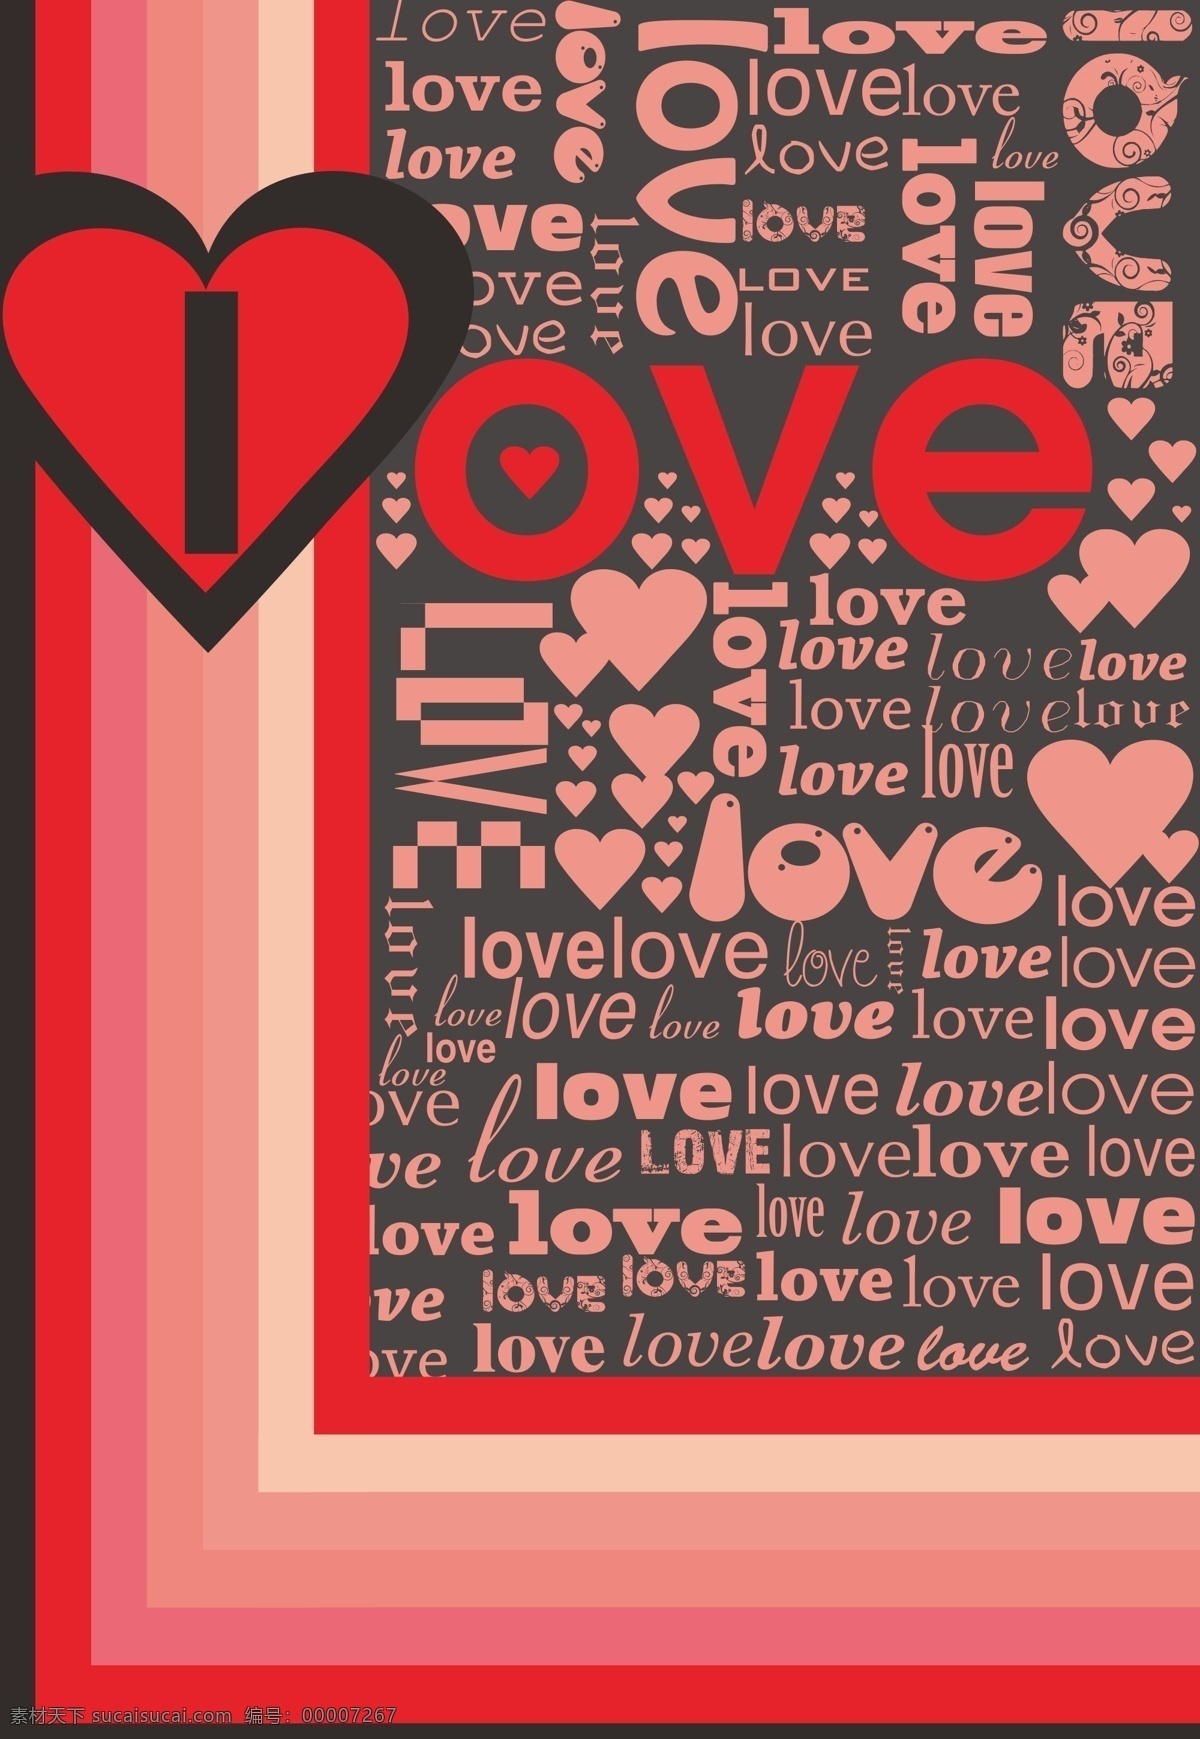 love 爱人 爱心 活动海报设计 浪漫 恋 情侣 活动 矢量 模板下载 情人节 英文设计 其他海报设计